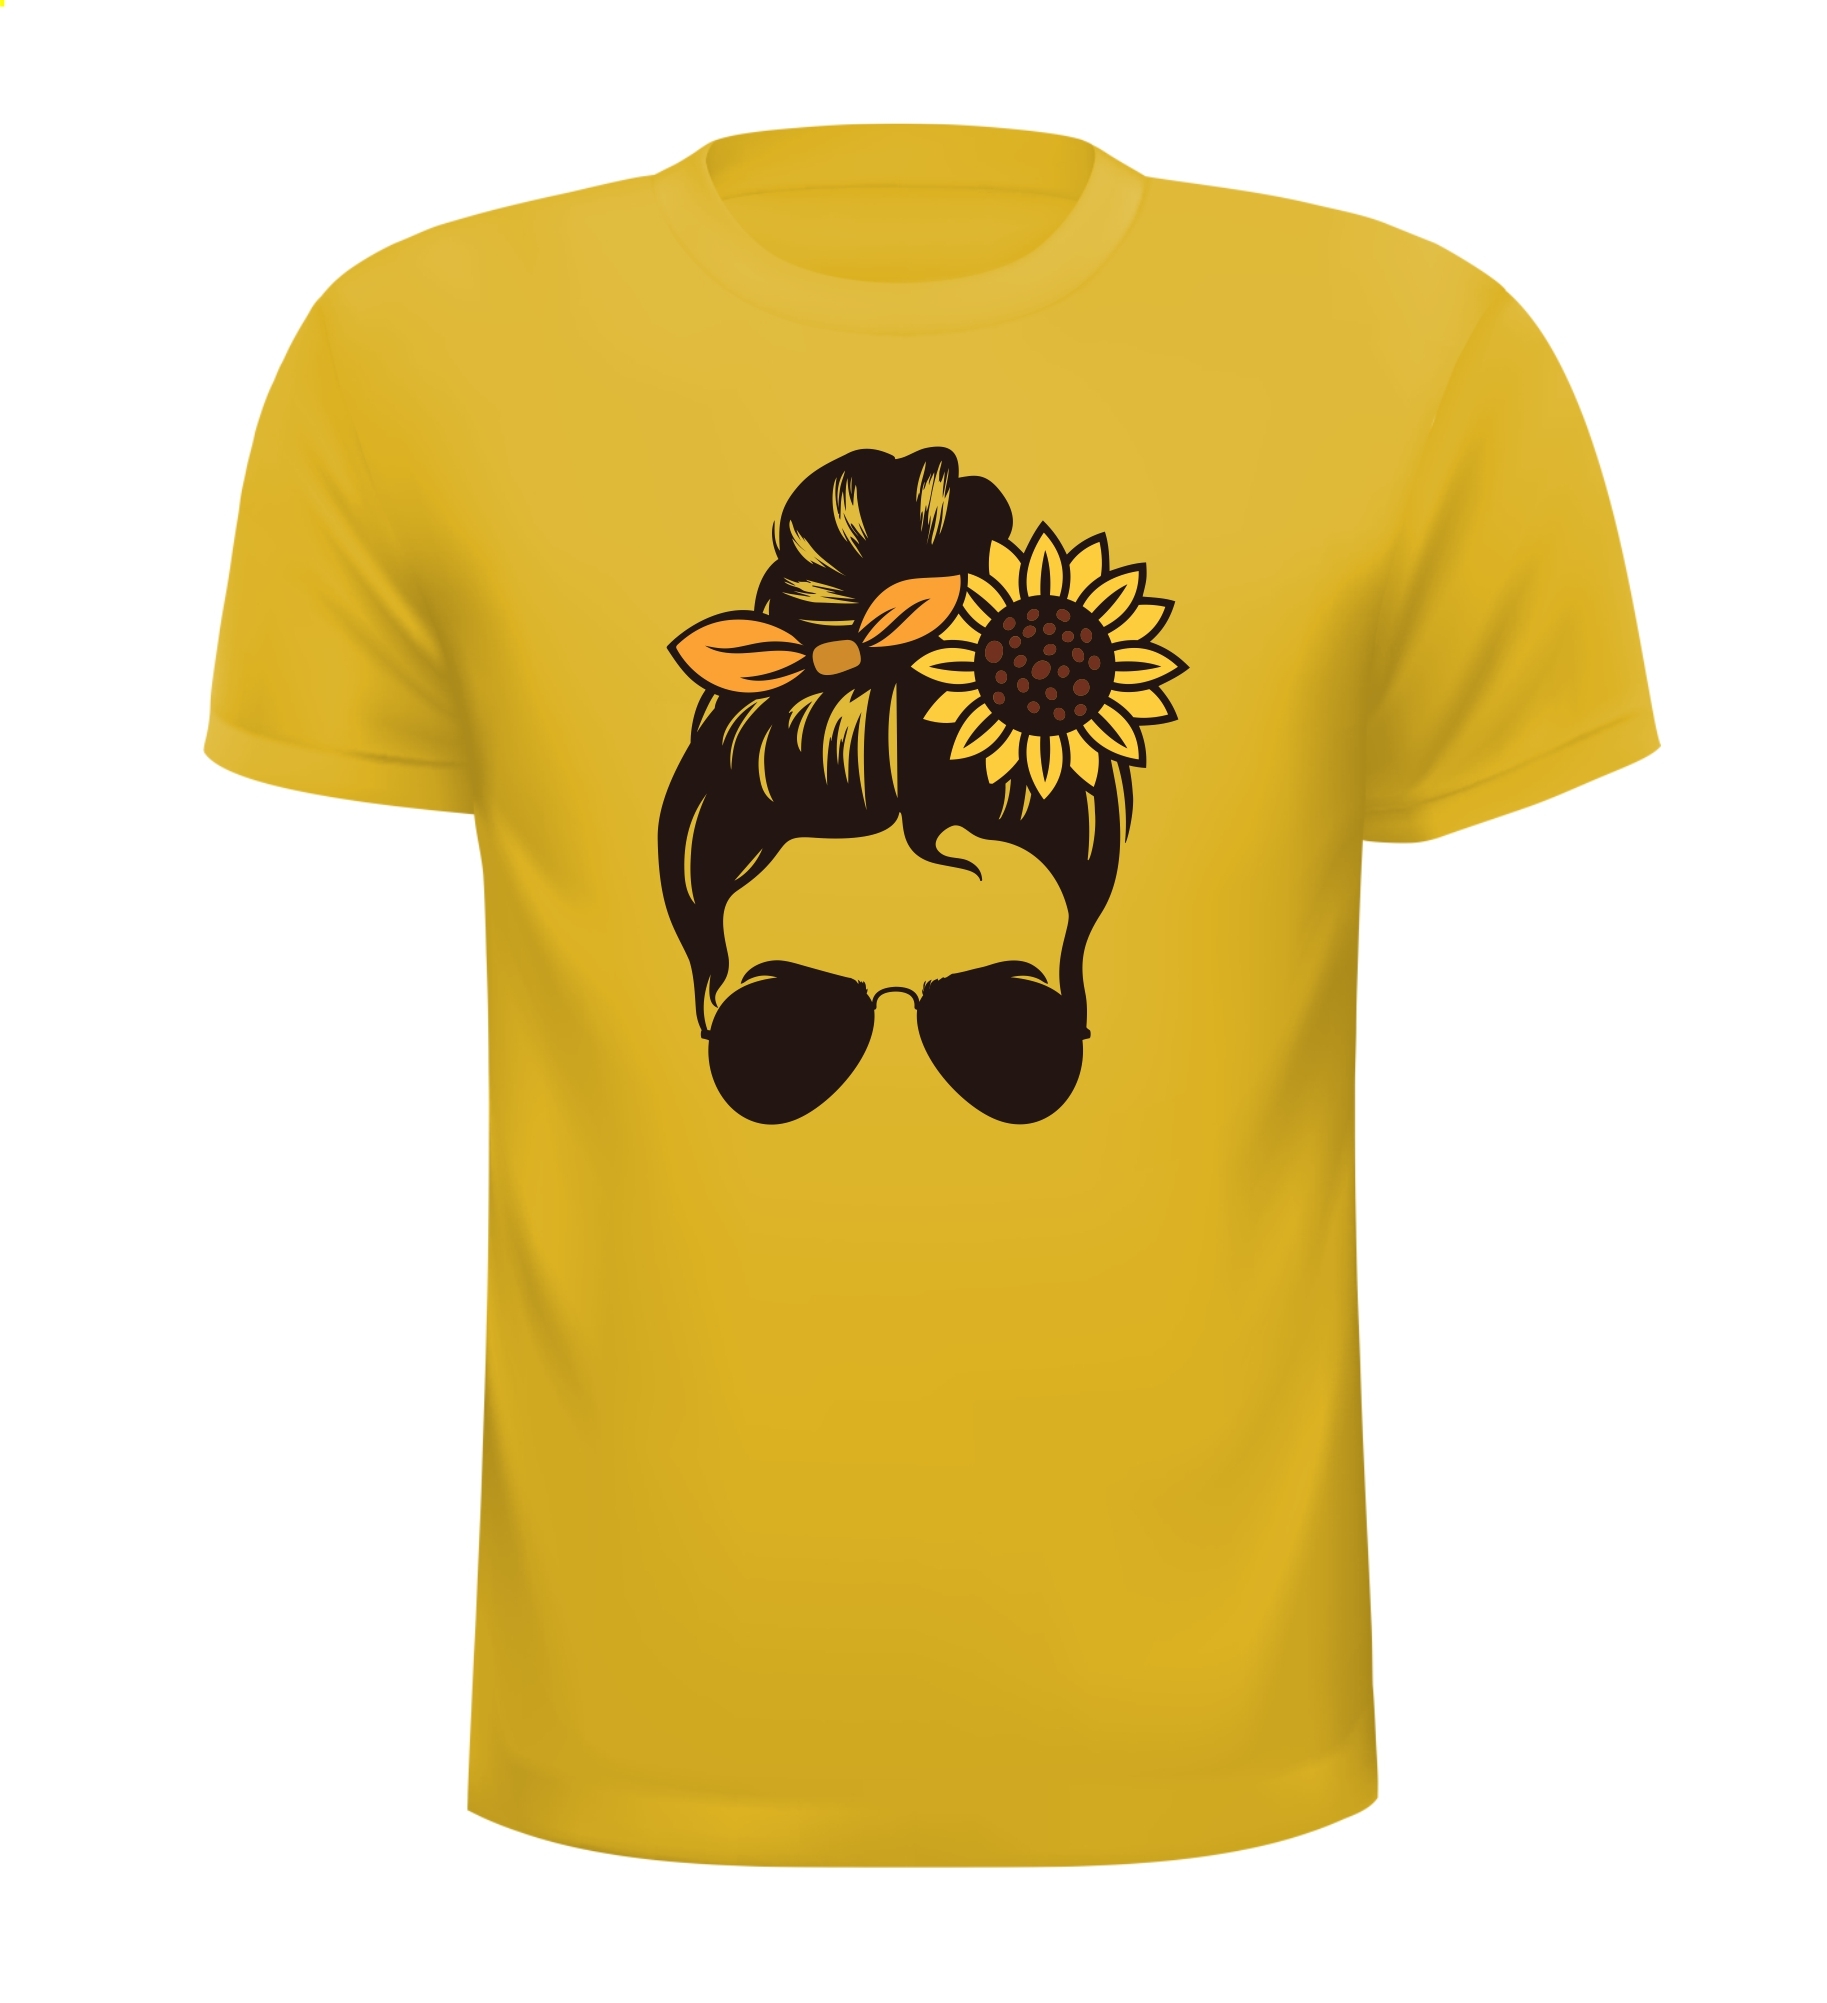 T-shirt messy sunflower-hair bun rommelige knot met zonnebloemhaar